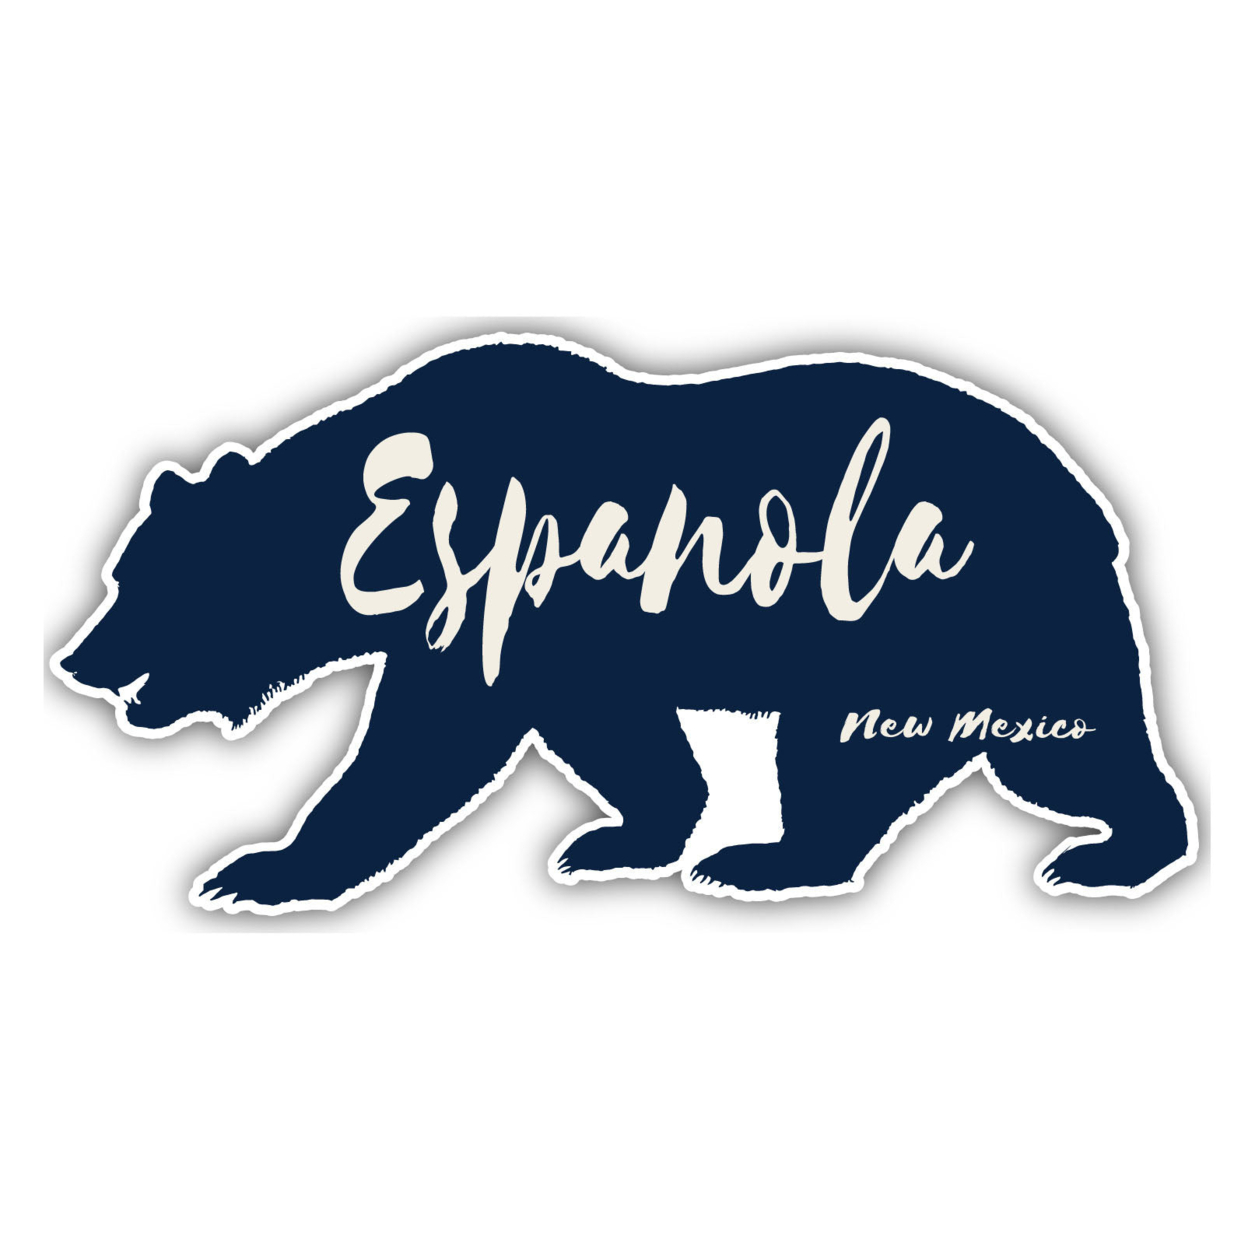 Espanola New Mexico Souvenir Decorative Stickers (Choose Theme And Size) - 4-Pack, 10-Inch, Bear